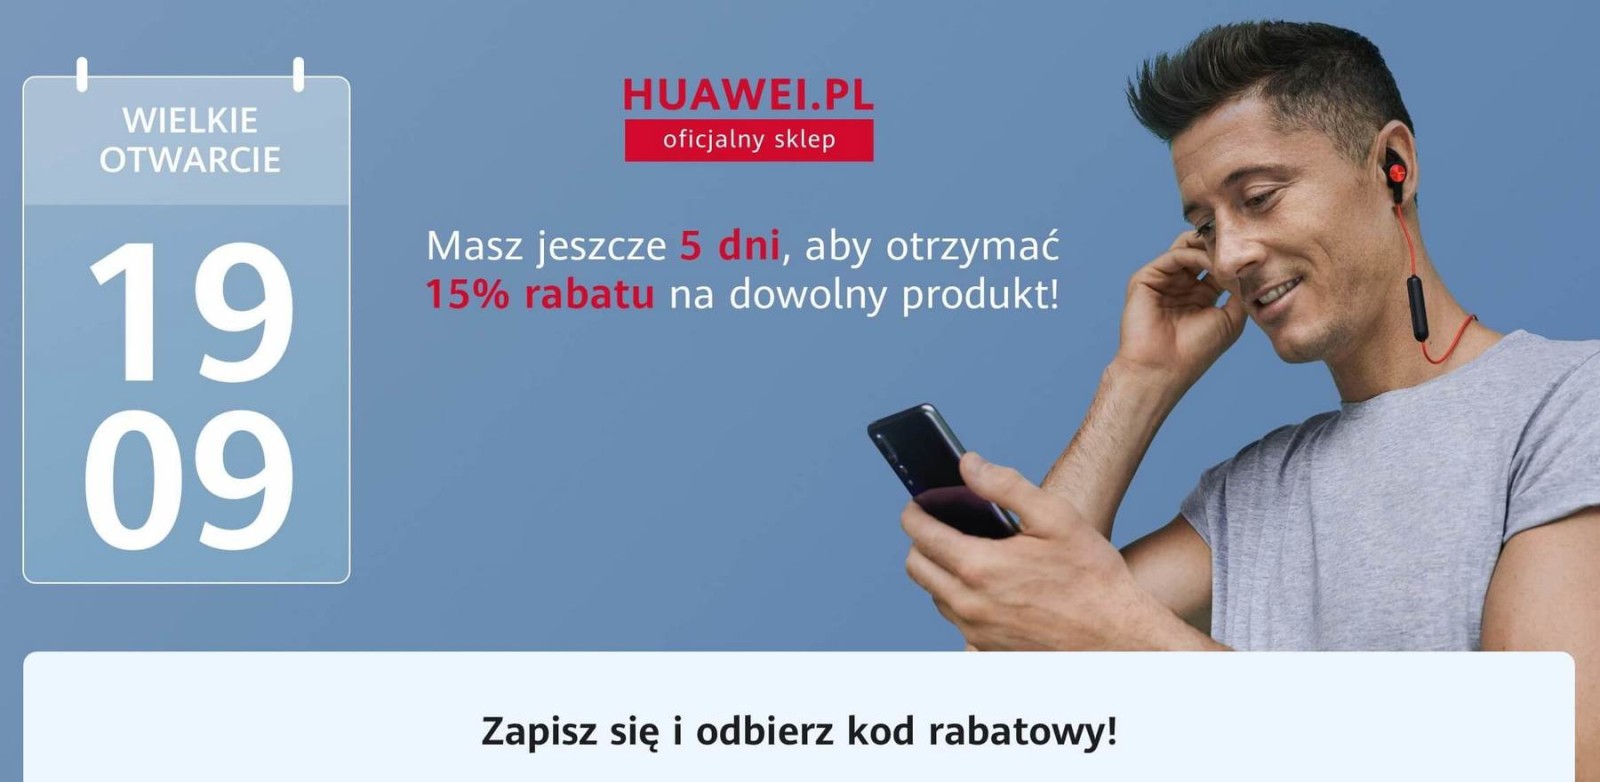 Интернет-магазин huawei.pl отркроют 19.09.2019